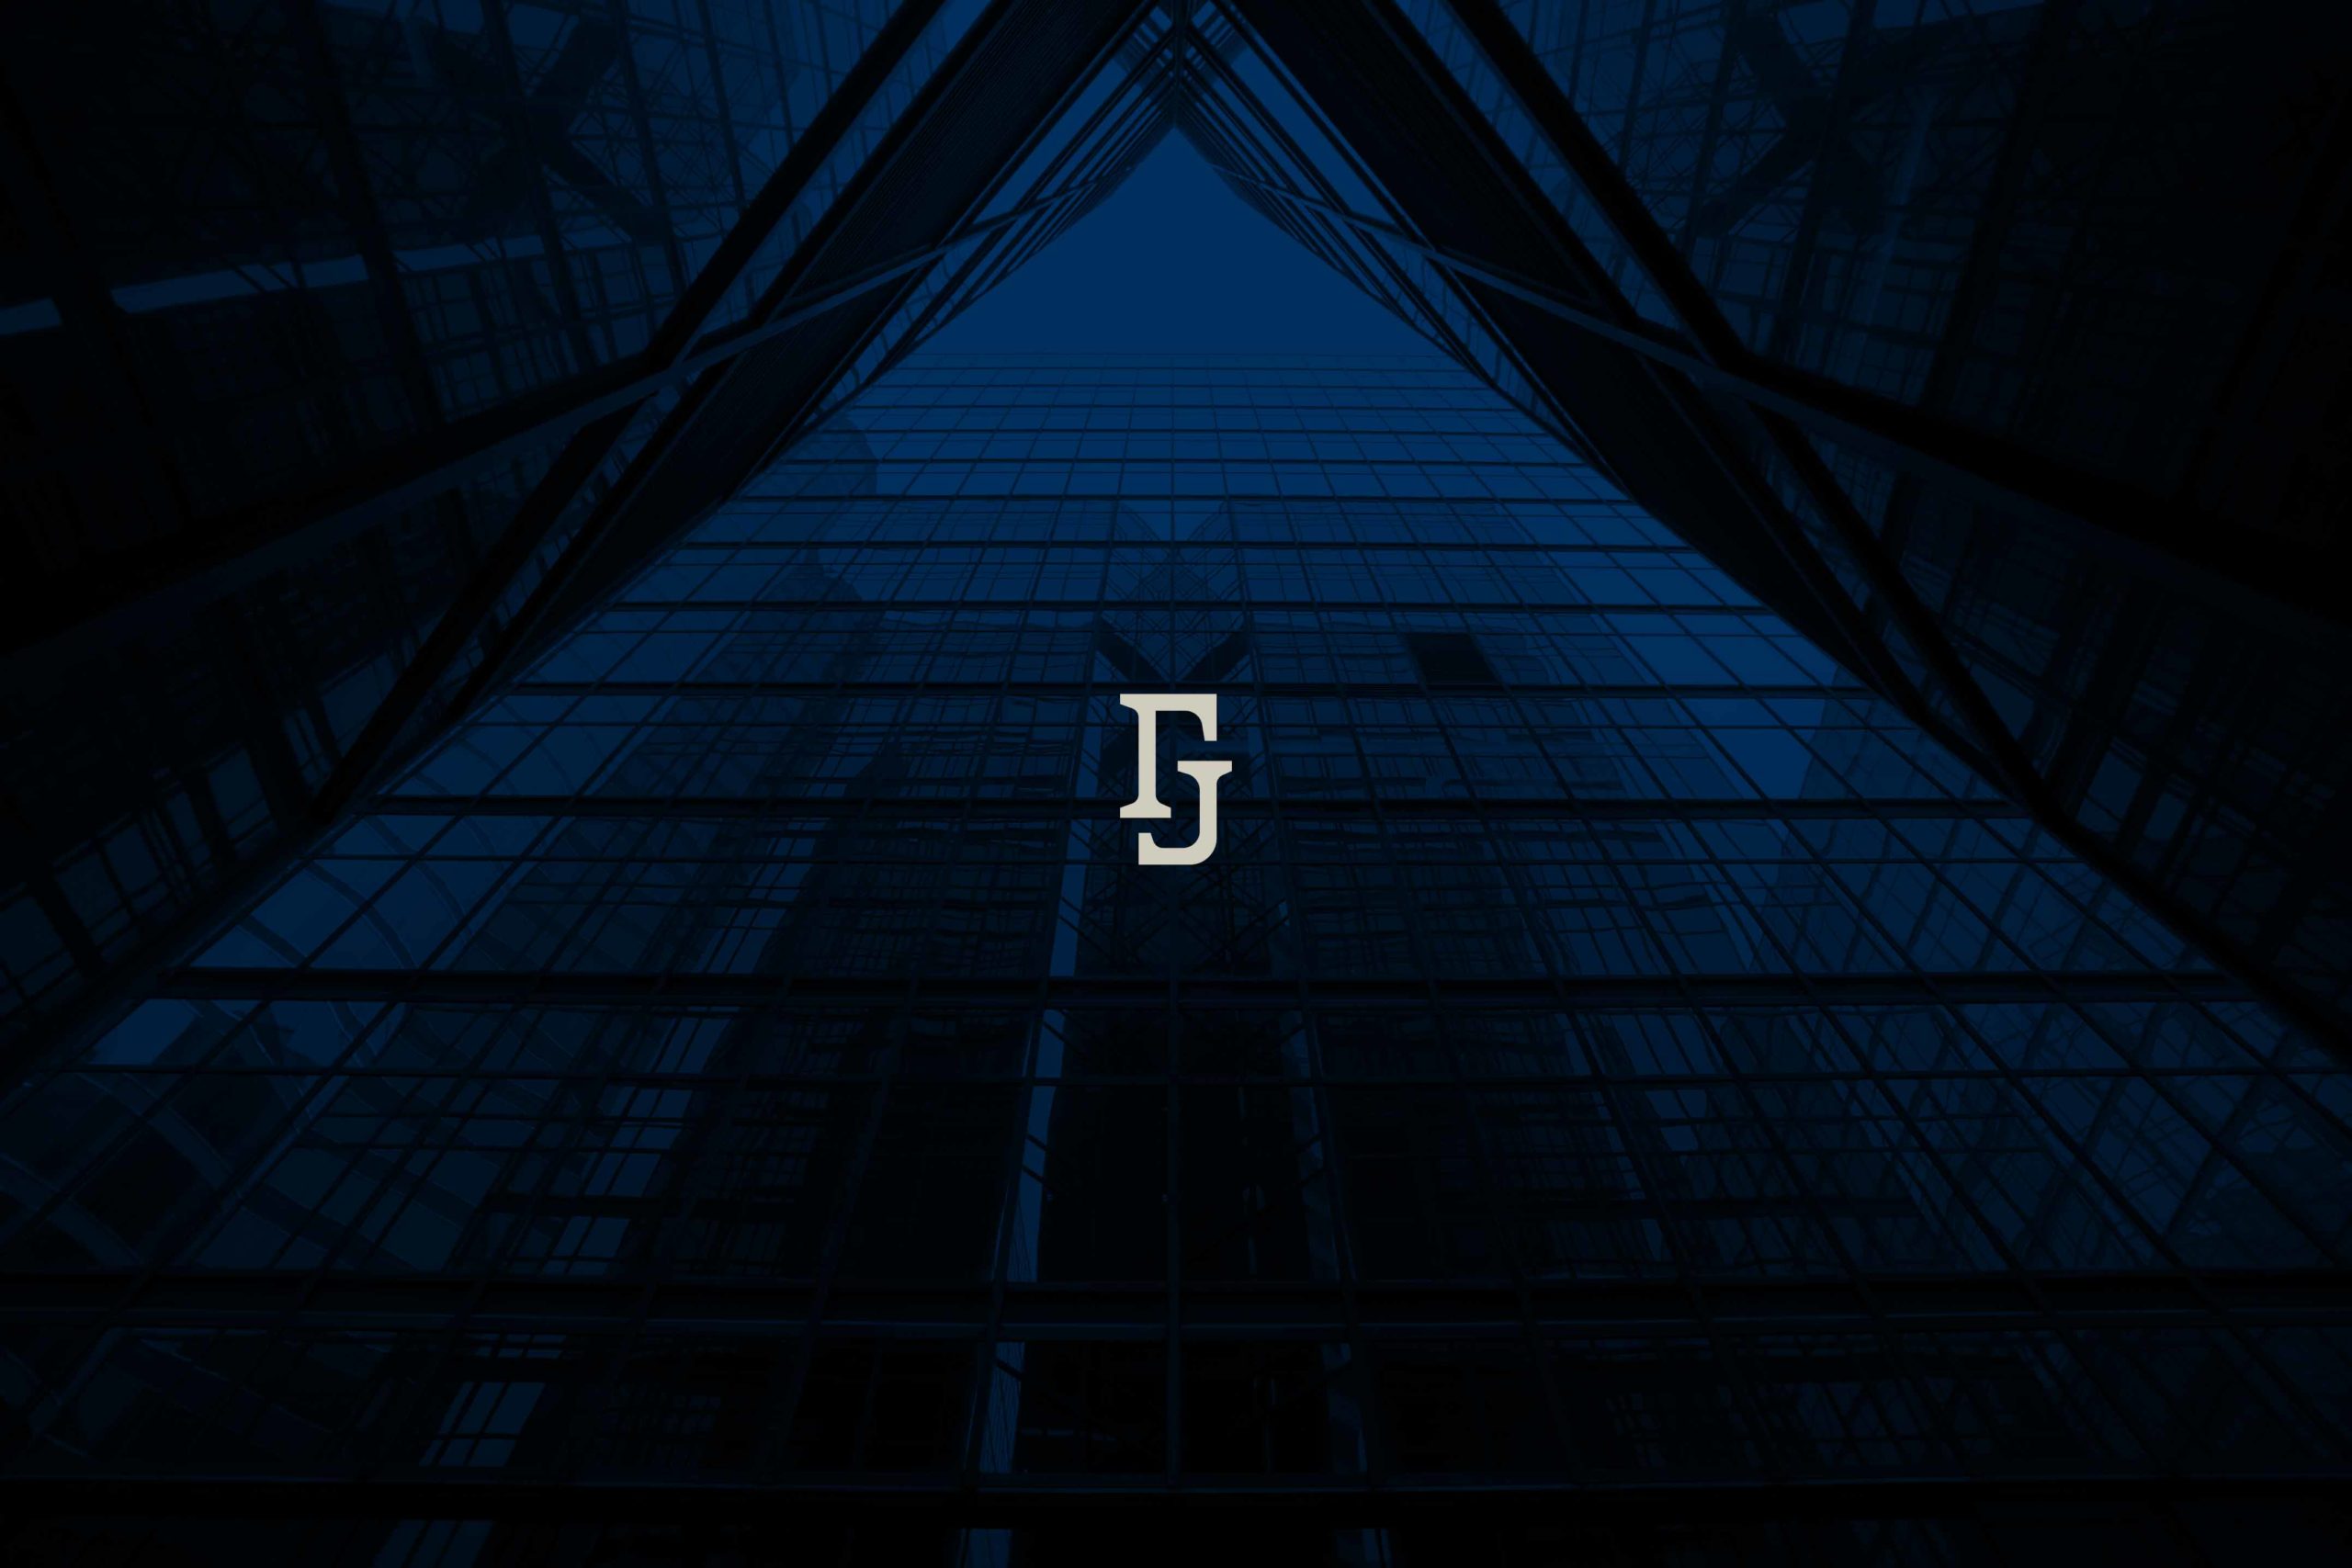 reflection-in-glass-wall-of-modern-skyscraper-JYFGPTP